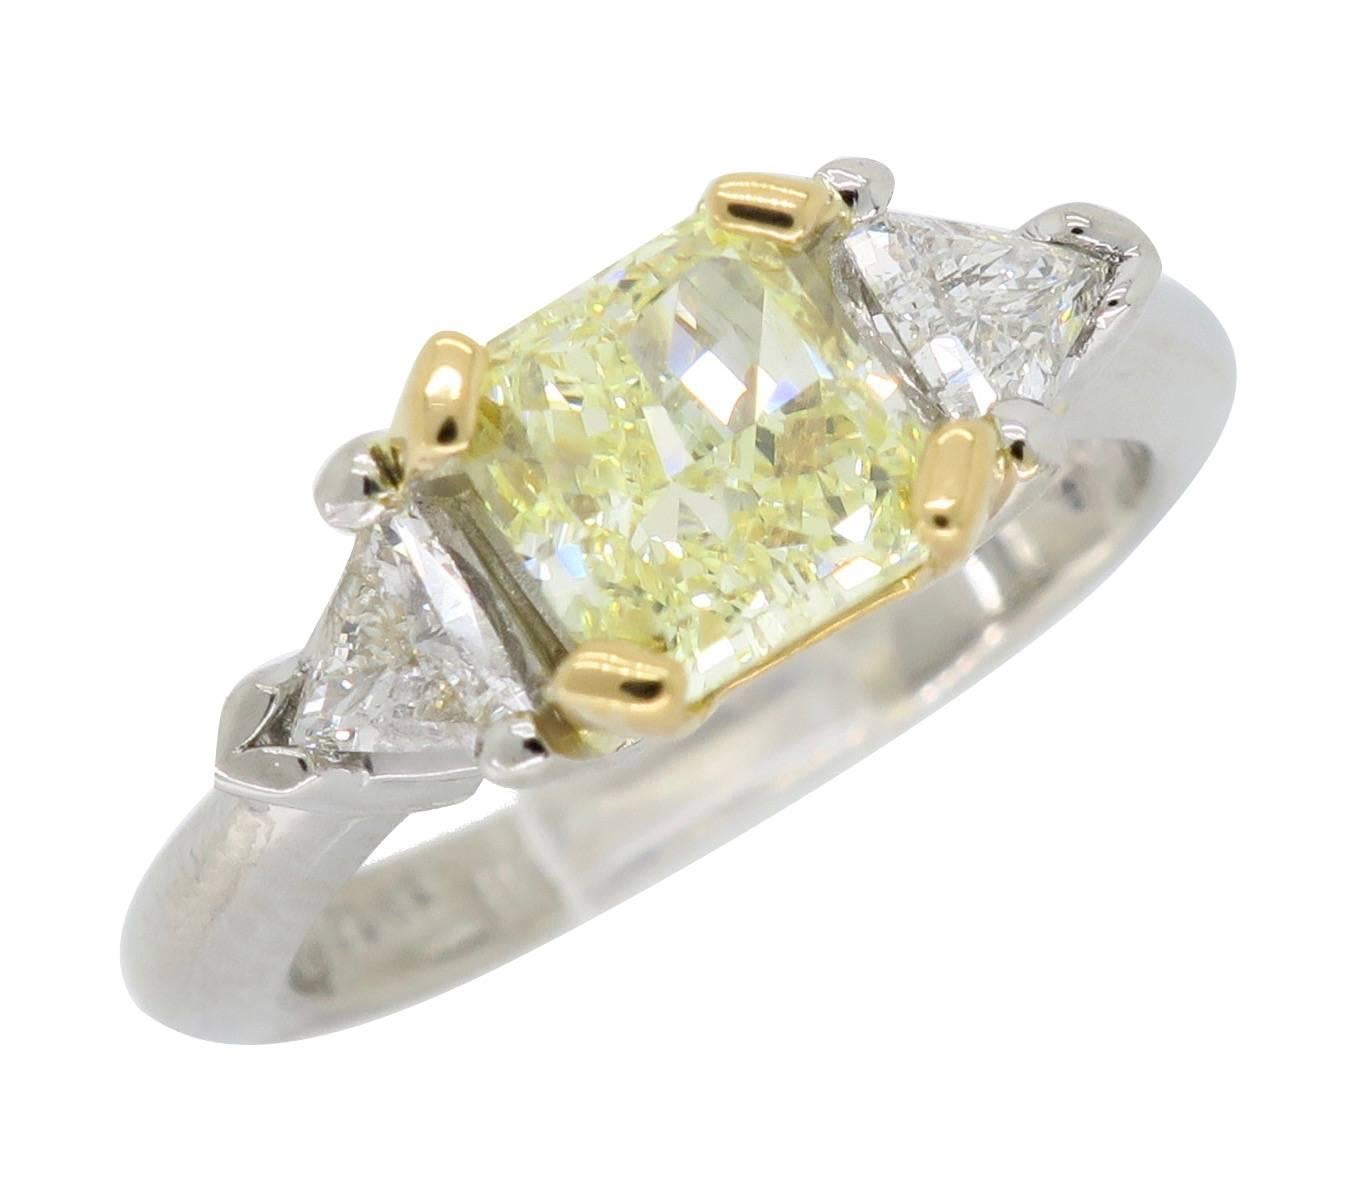 Women's or Men's Certified Fancy Yellow Three-Stone Diamond Ring in Platinum and 18 Karat Gold